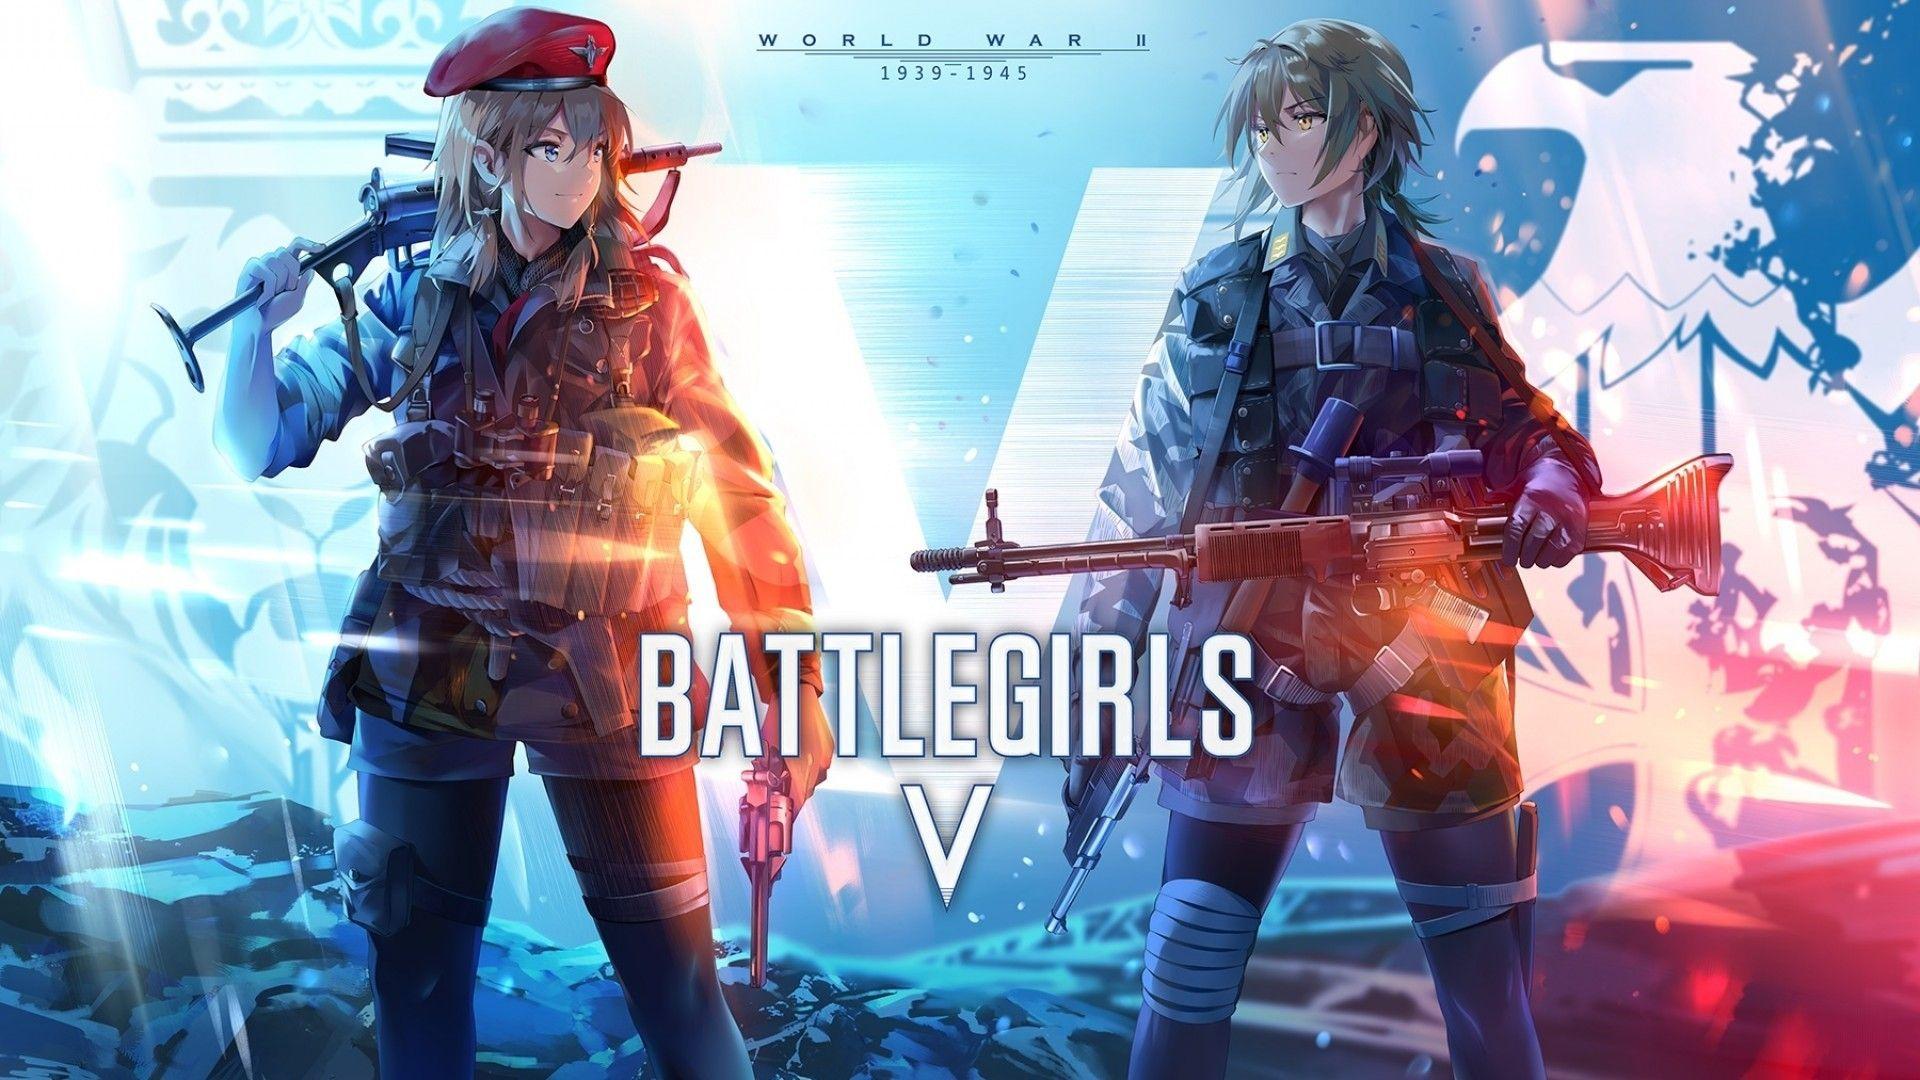 Battlefield Anime Wallpapers - Top Free Battlefield Anime Backgrounds ...